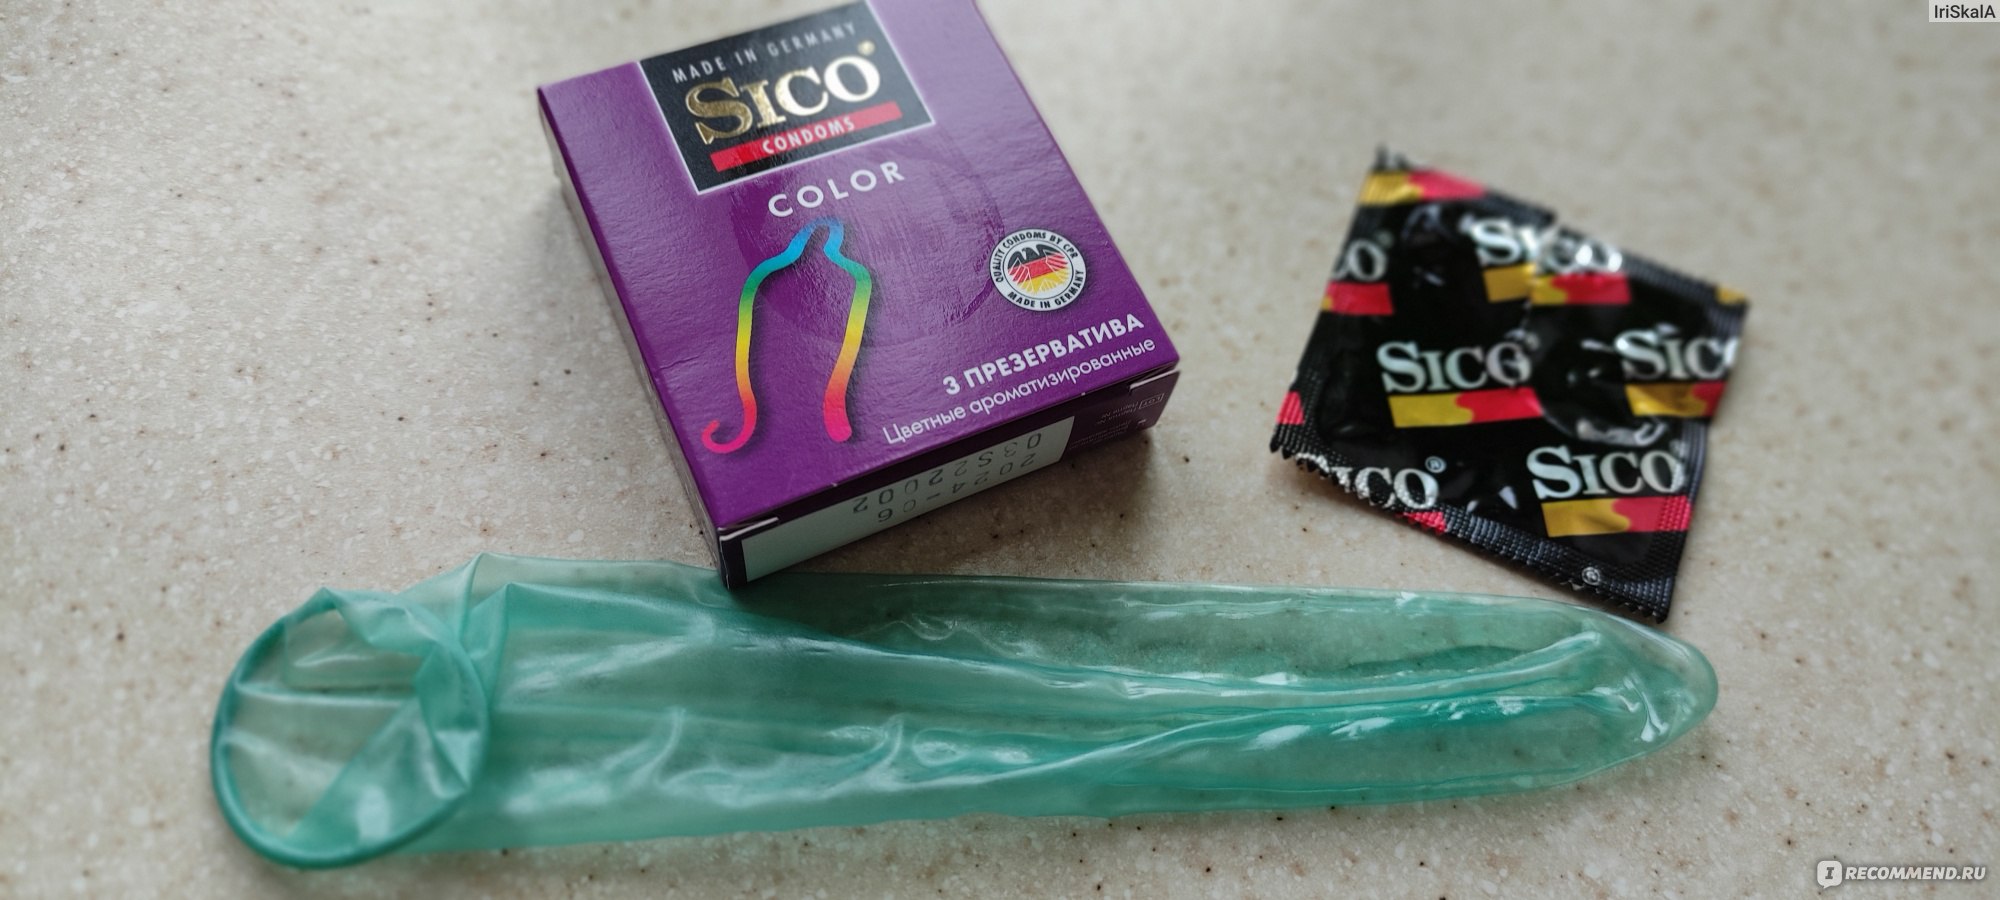 Презервативы ON fruit & color, 3 шт